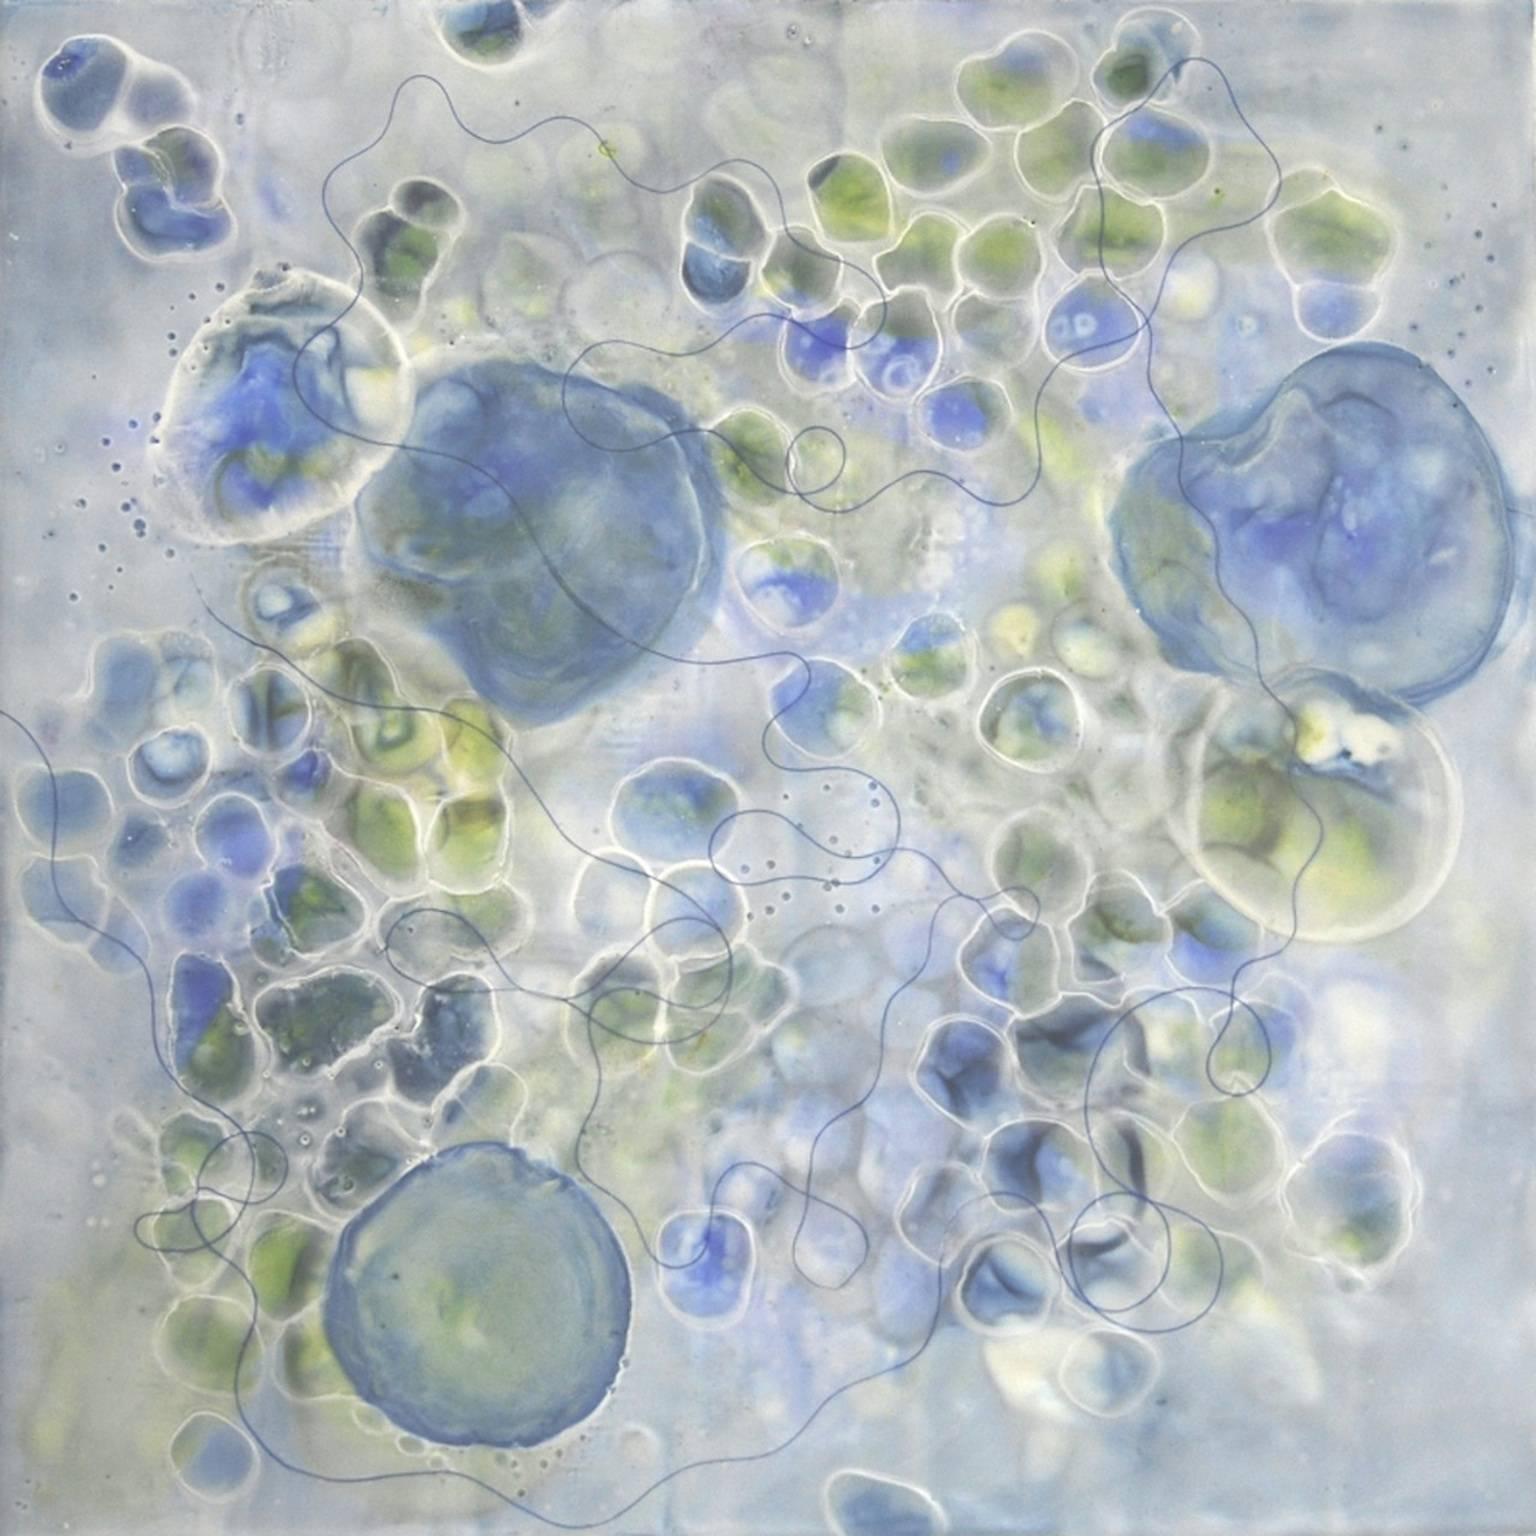 "Bio Flow 3", microscopic, blues, greens, whites, encaustic, pastel, mixed media - Mixed Media Art by Kay Hartung